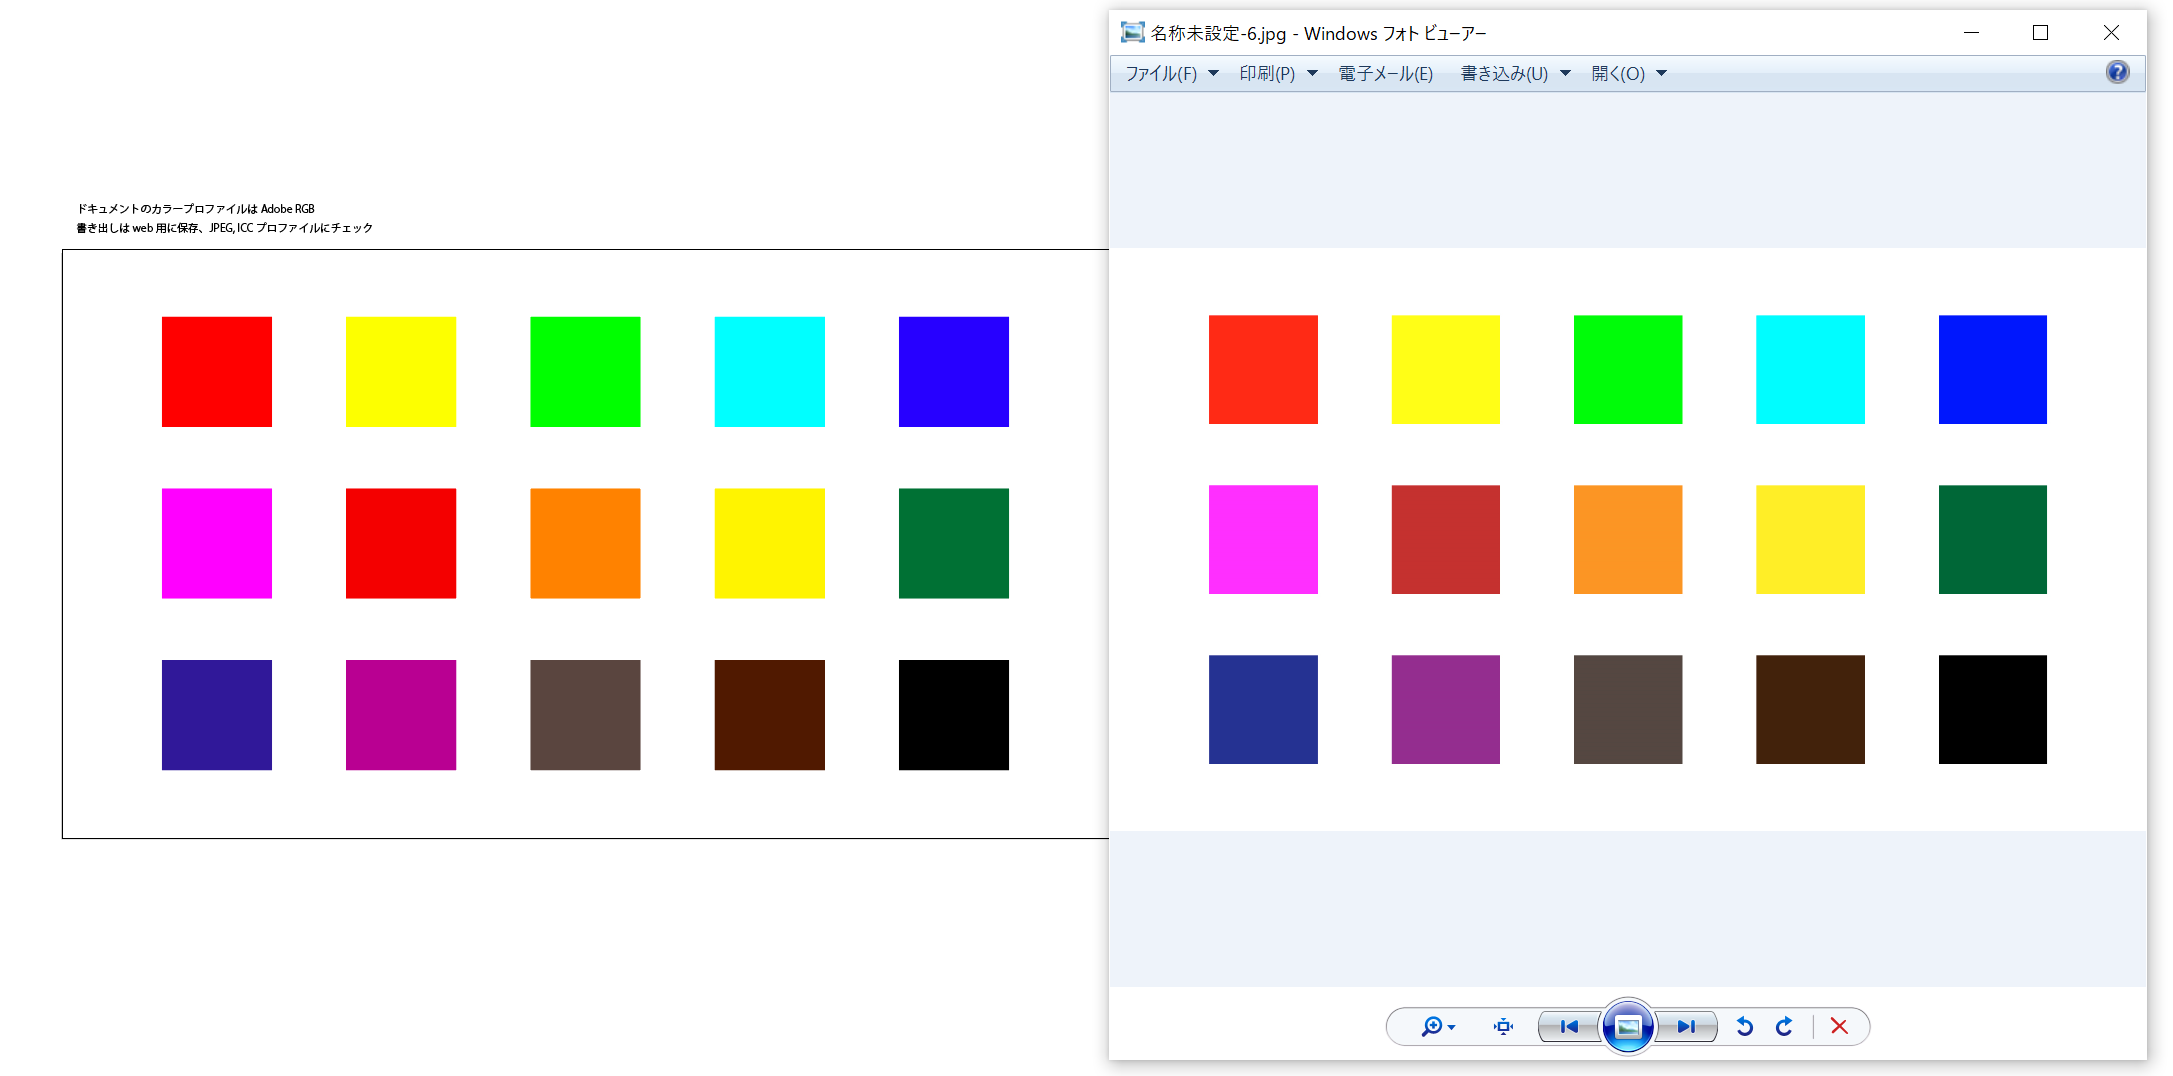 Re Illustrator上で表示される色と書き出しで出力される色が異なる Adobe Support Community